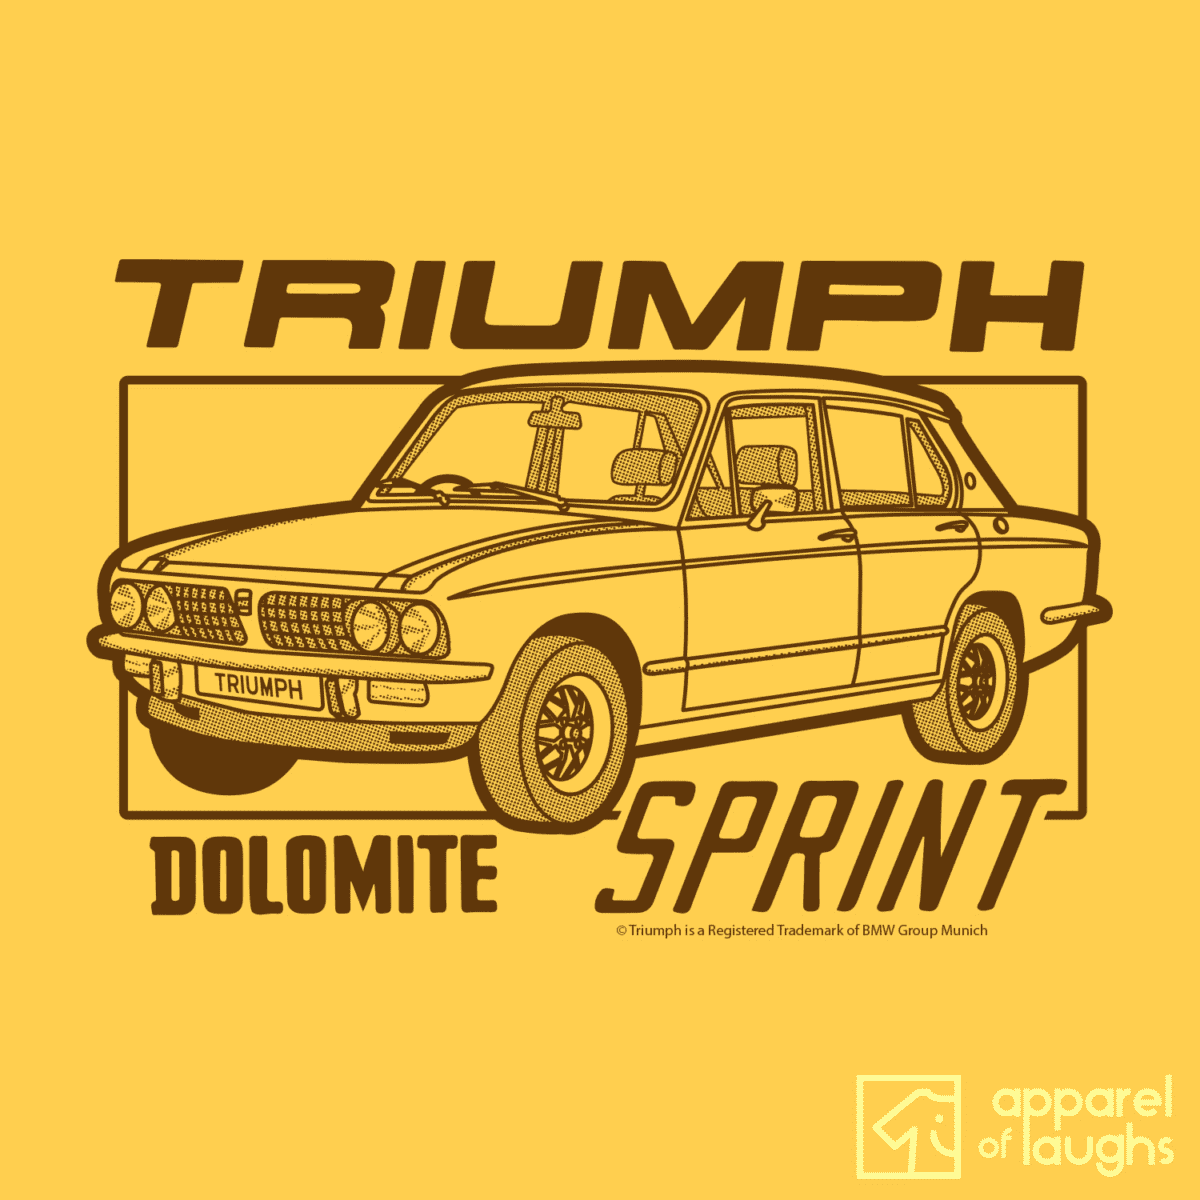 Triumph Dolomite Sprint Car Brand Vintage Retro British Leyland Motoring Automotive T-Shirt Design Daisy